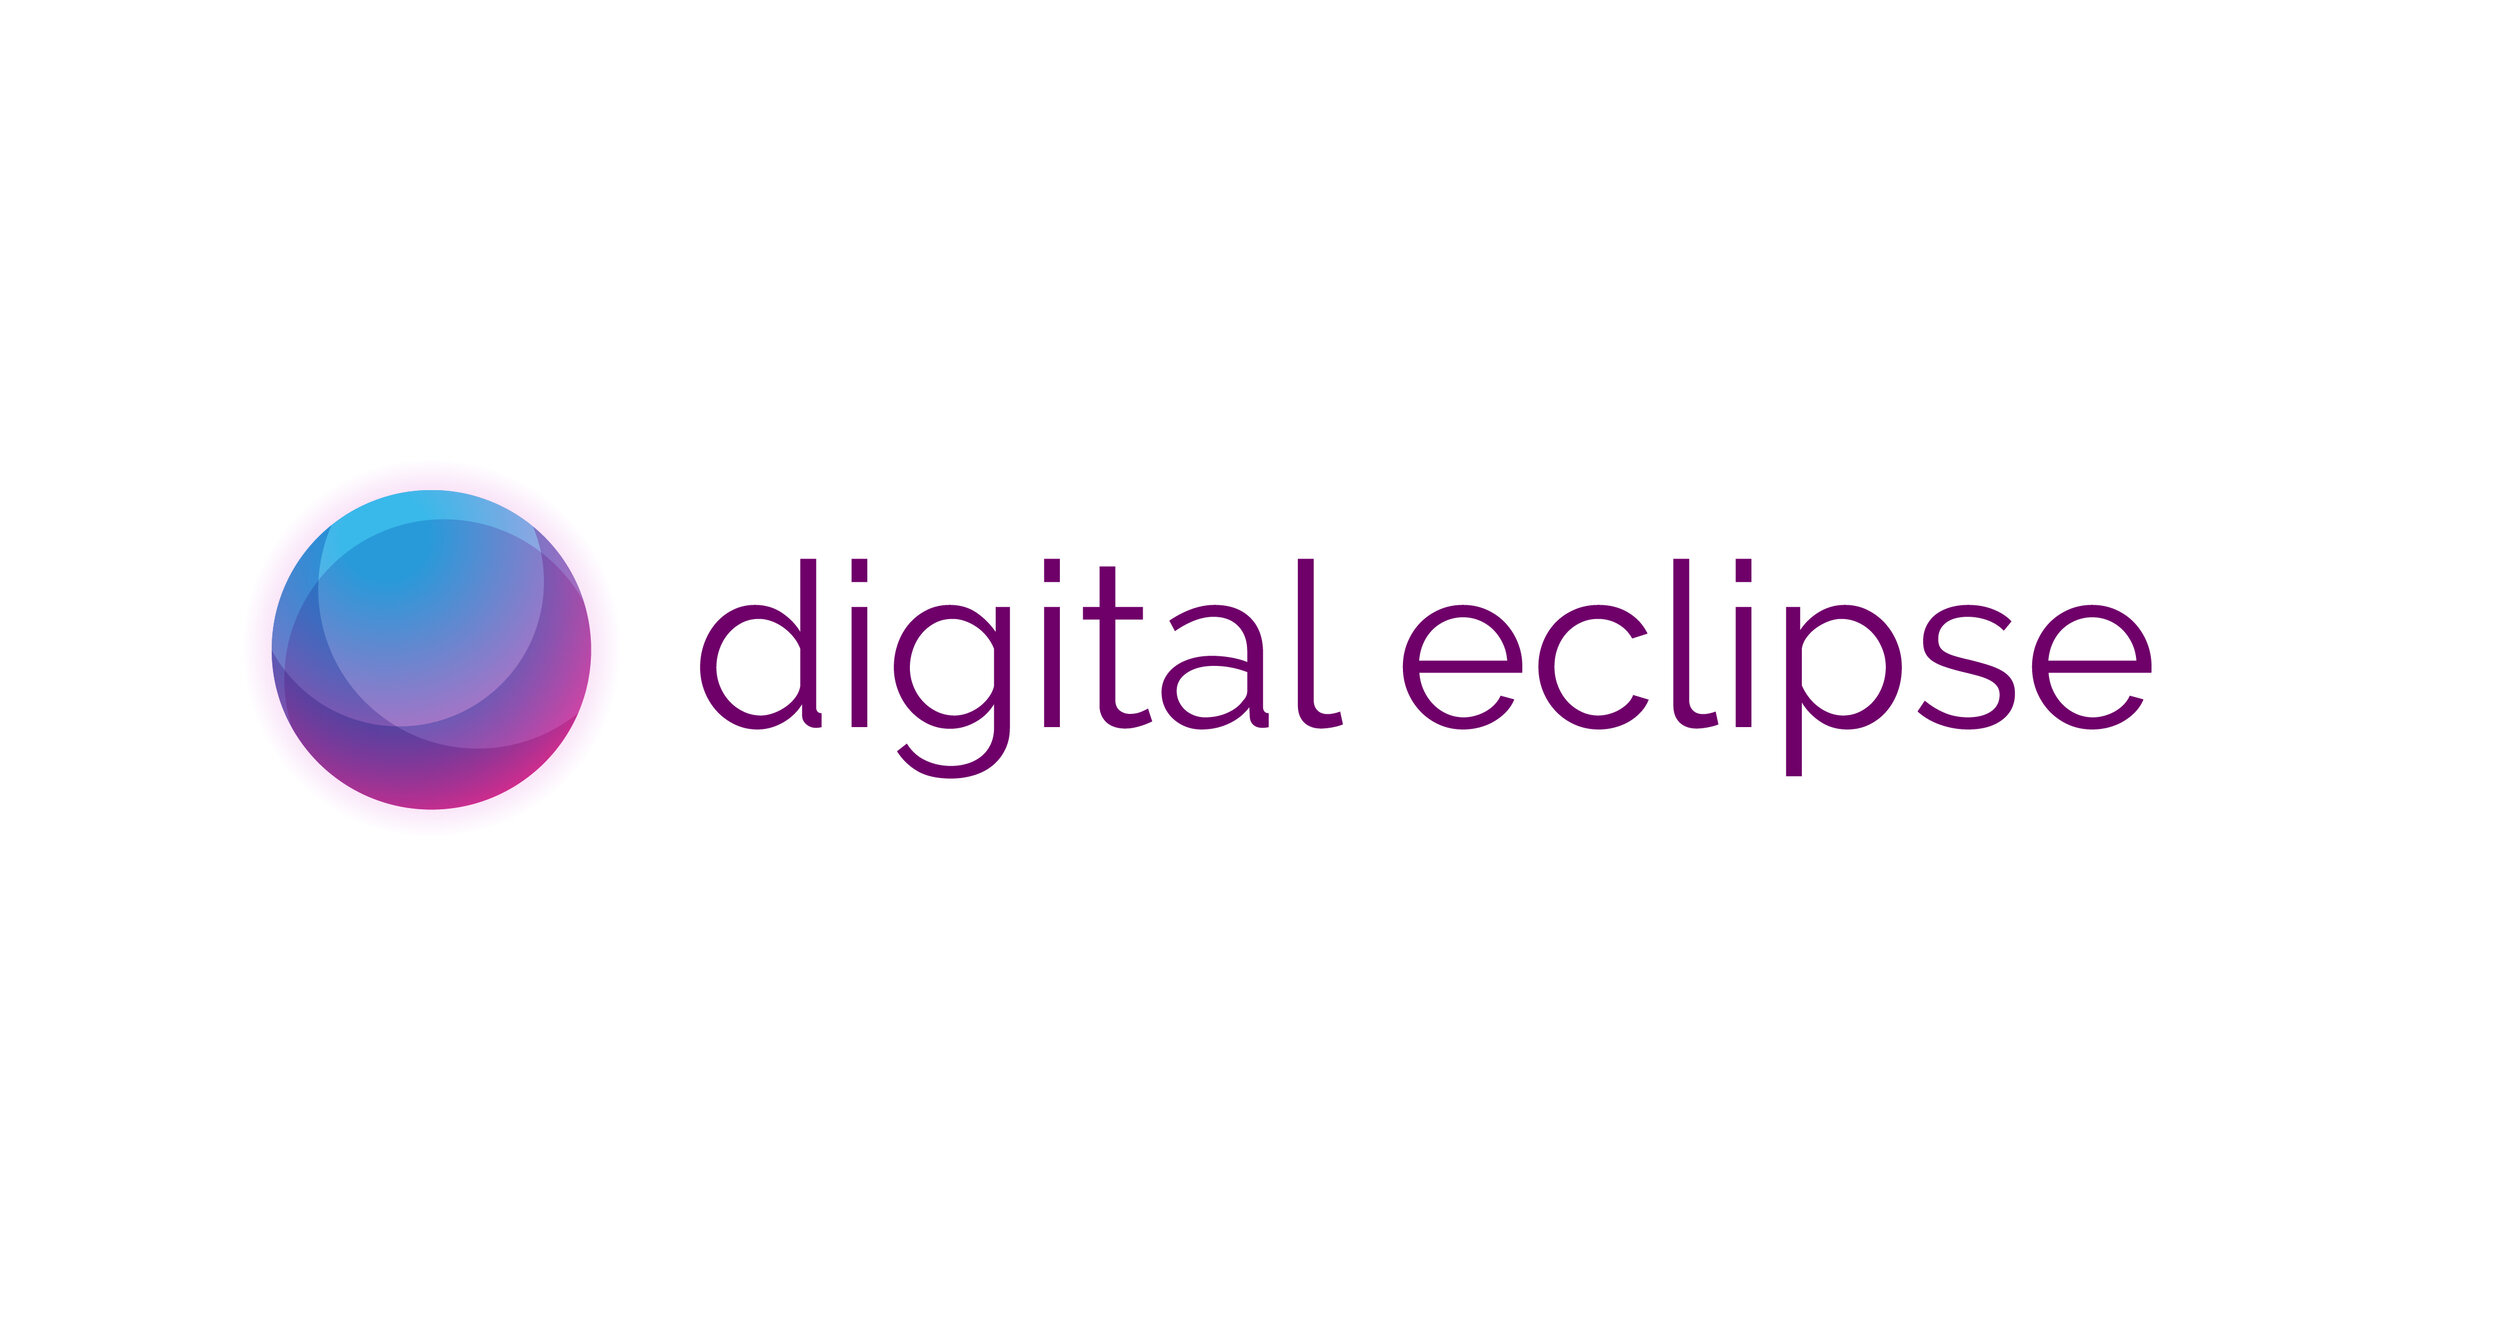 Digital eclipse LOGO-01.jpg